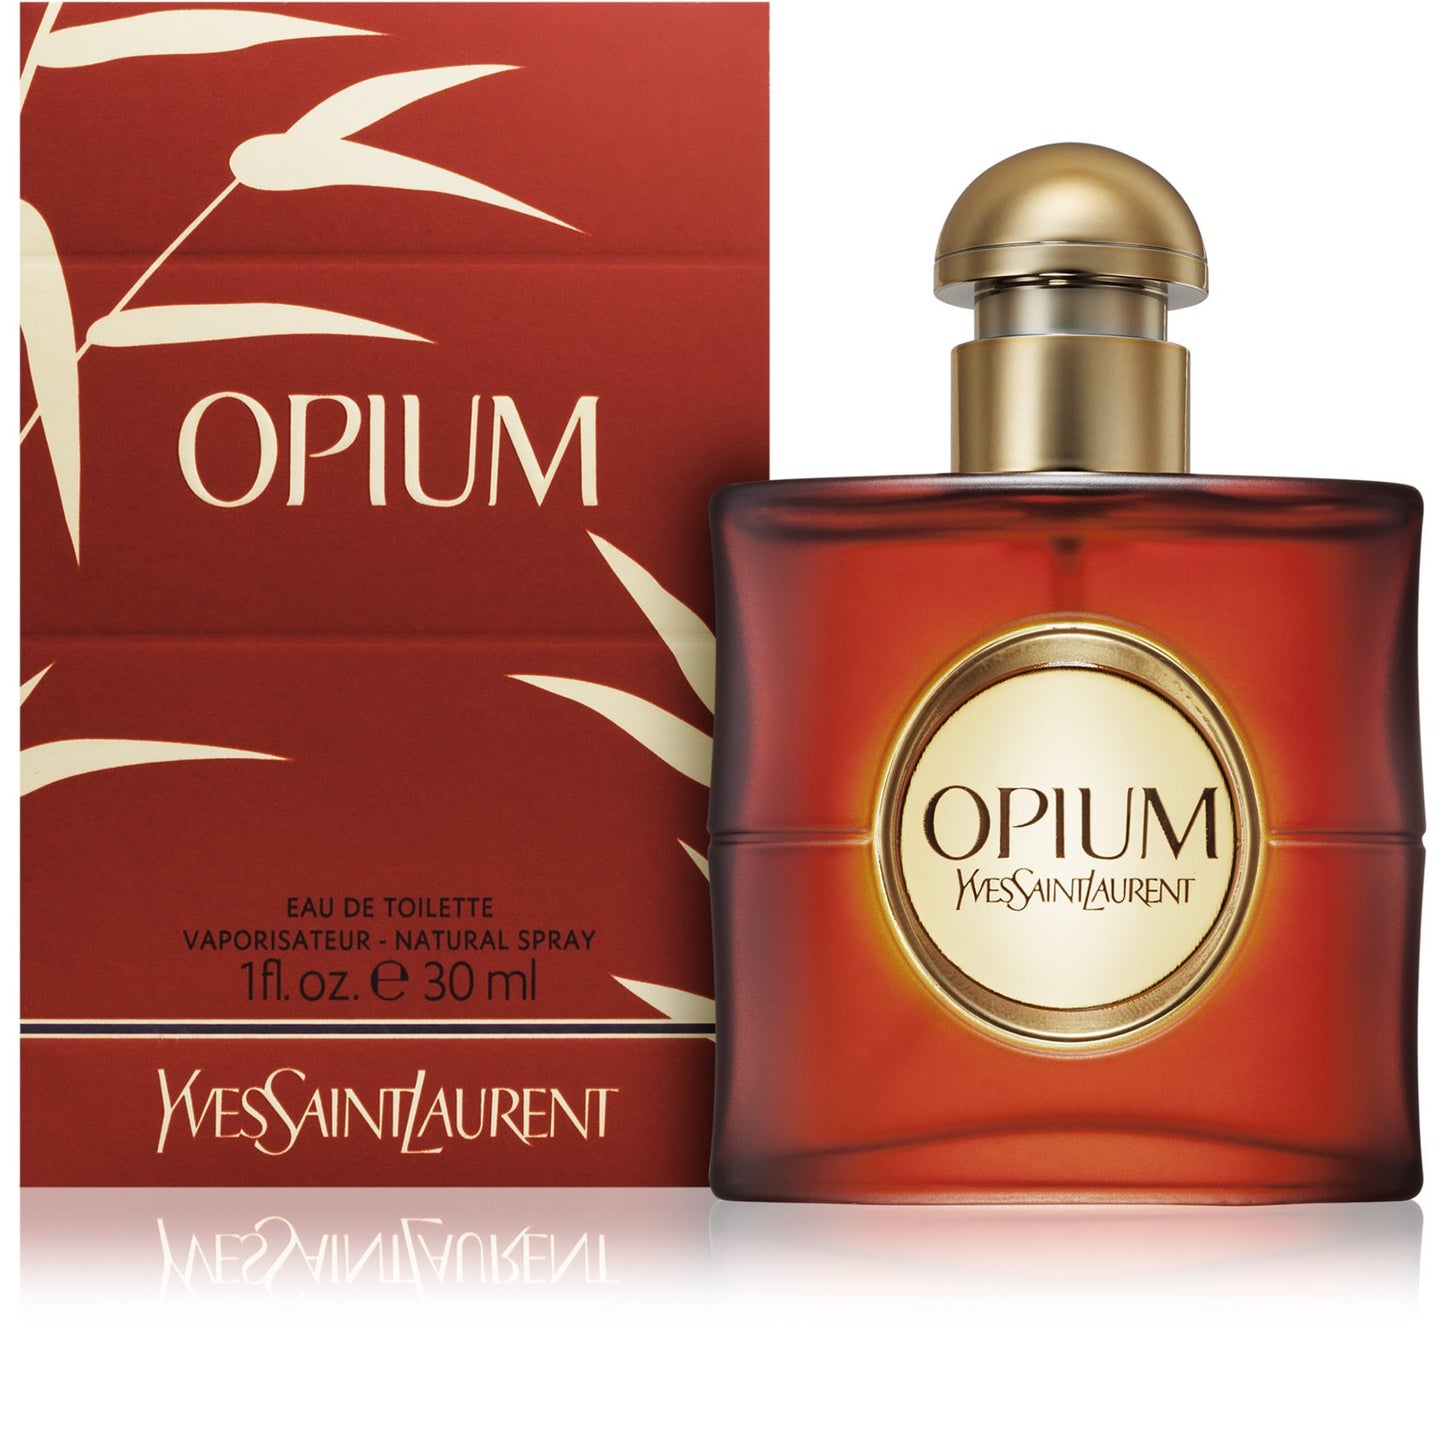 Yves Saint Laurent Opium Et